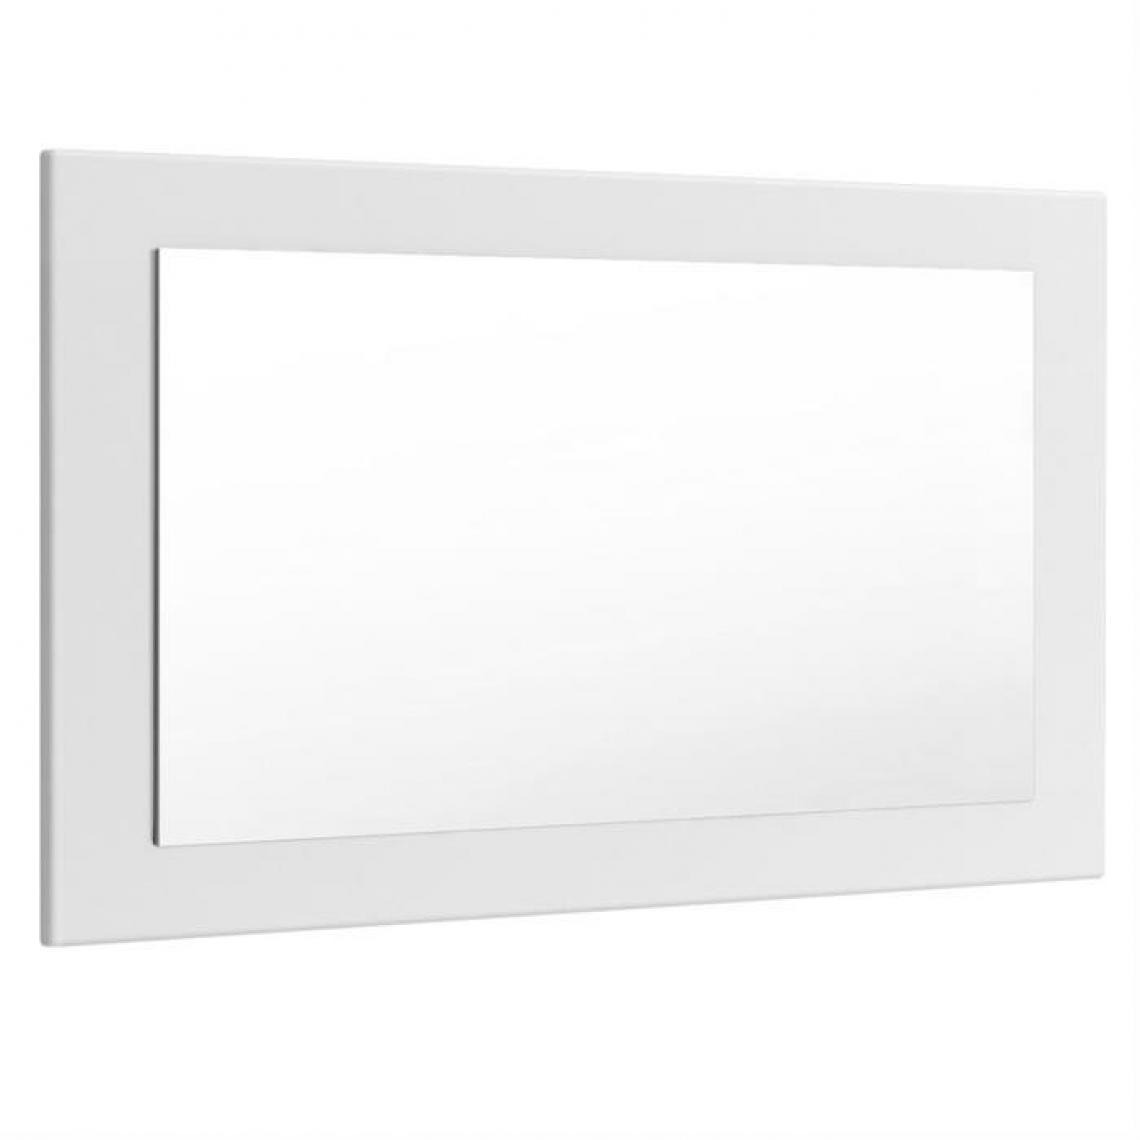 Mpc - Miroir blanc mat (HxLxP): 45 x 89 x 2 - Miroir de salle de bain